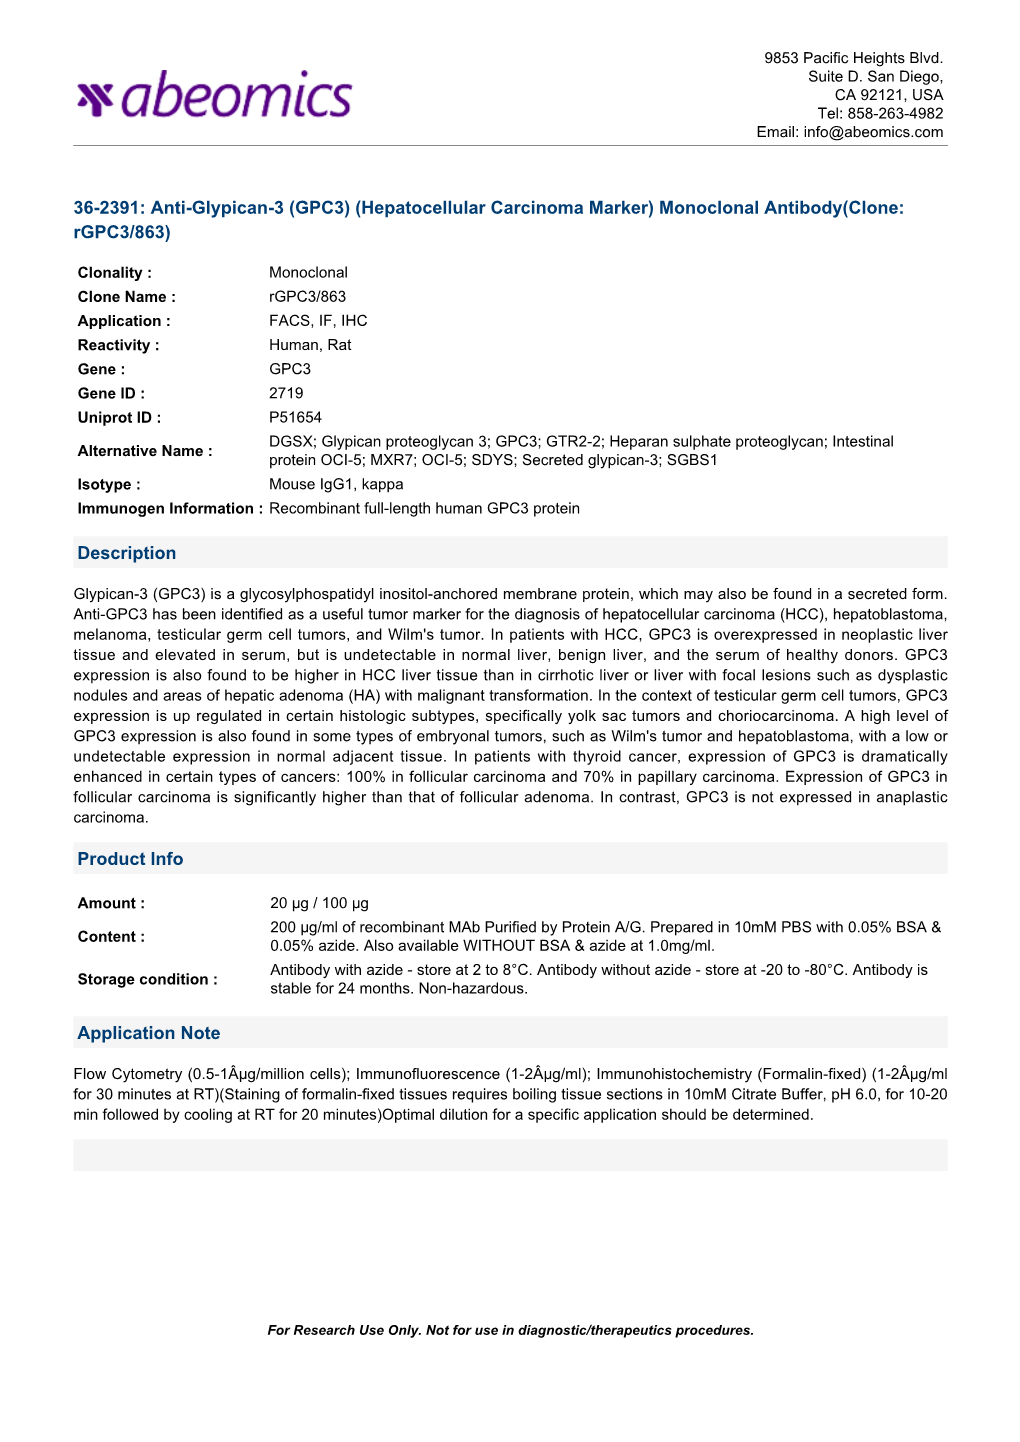 36-2391: Anti-Glypican-3 (GPC3) (Hepatocellular Carcinoma Marker) Monoclonal Antibody(Clone: Rgpc3/863)